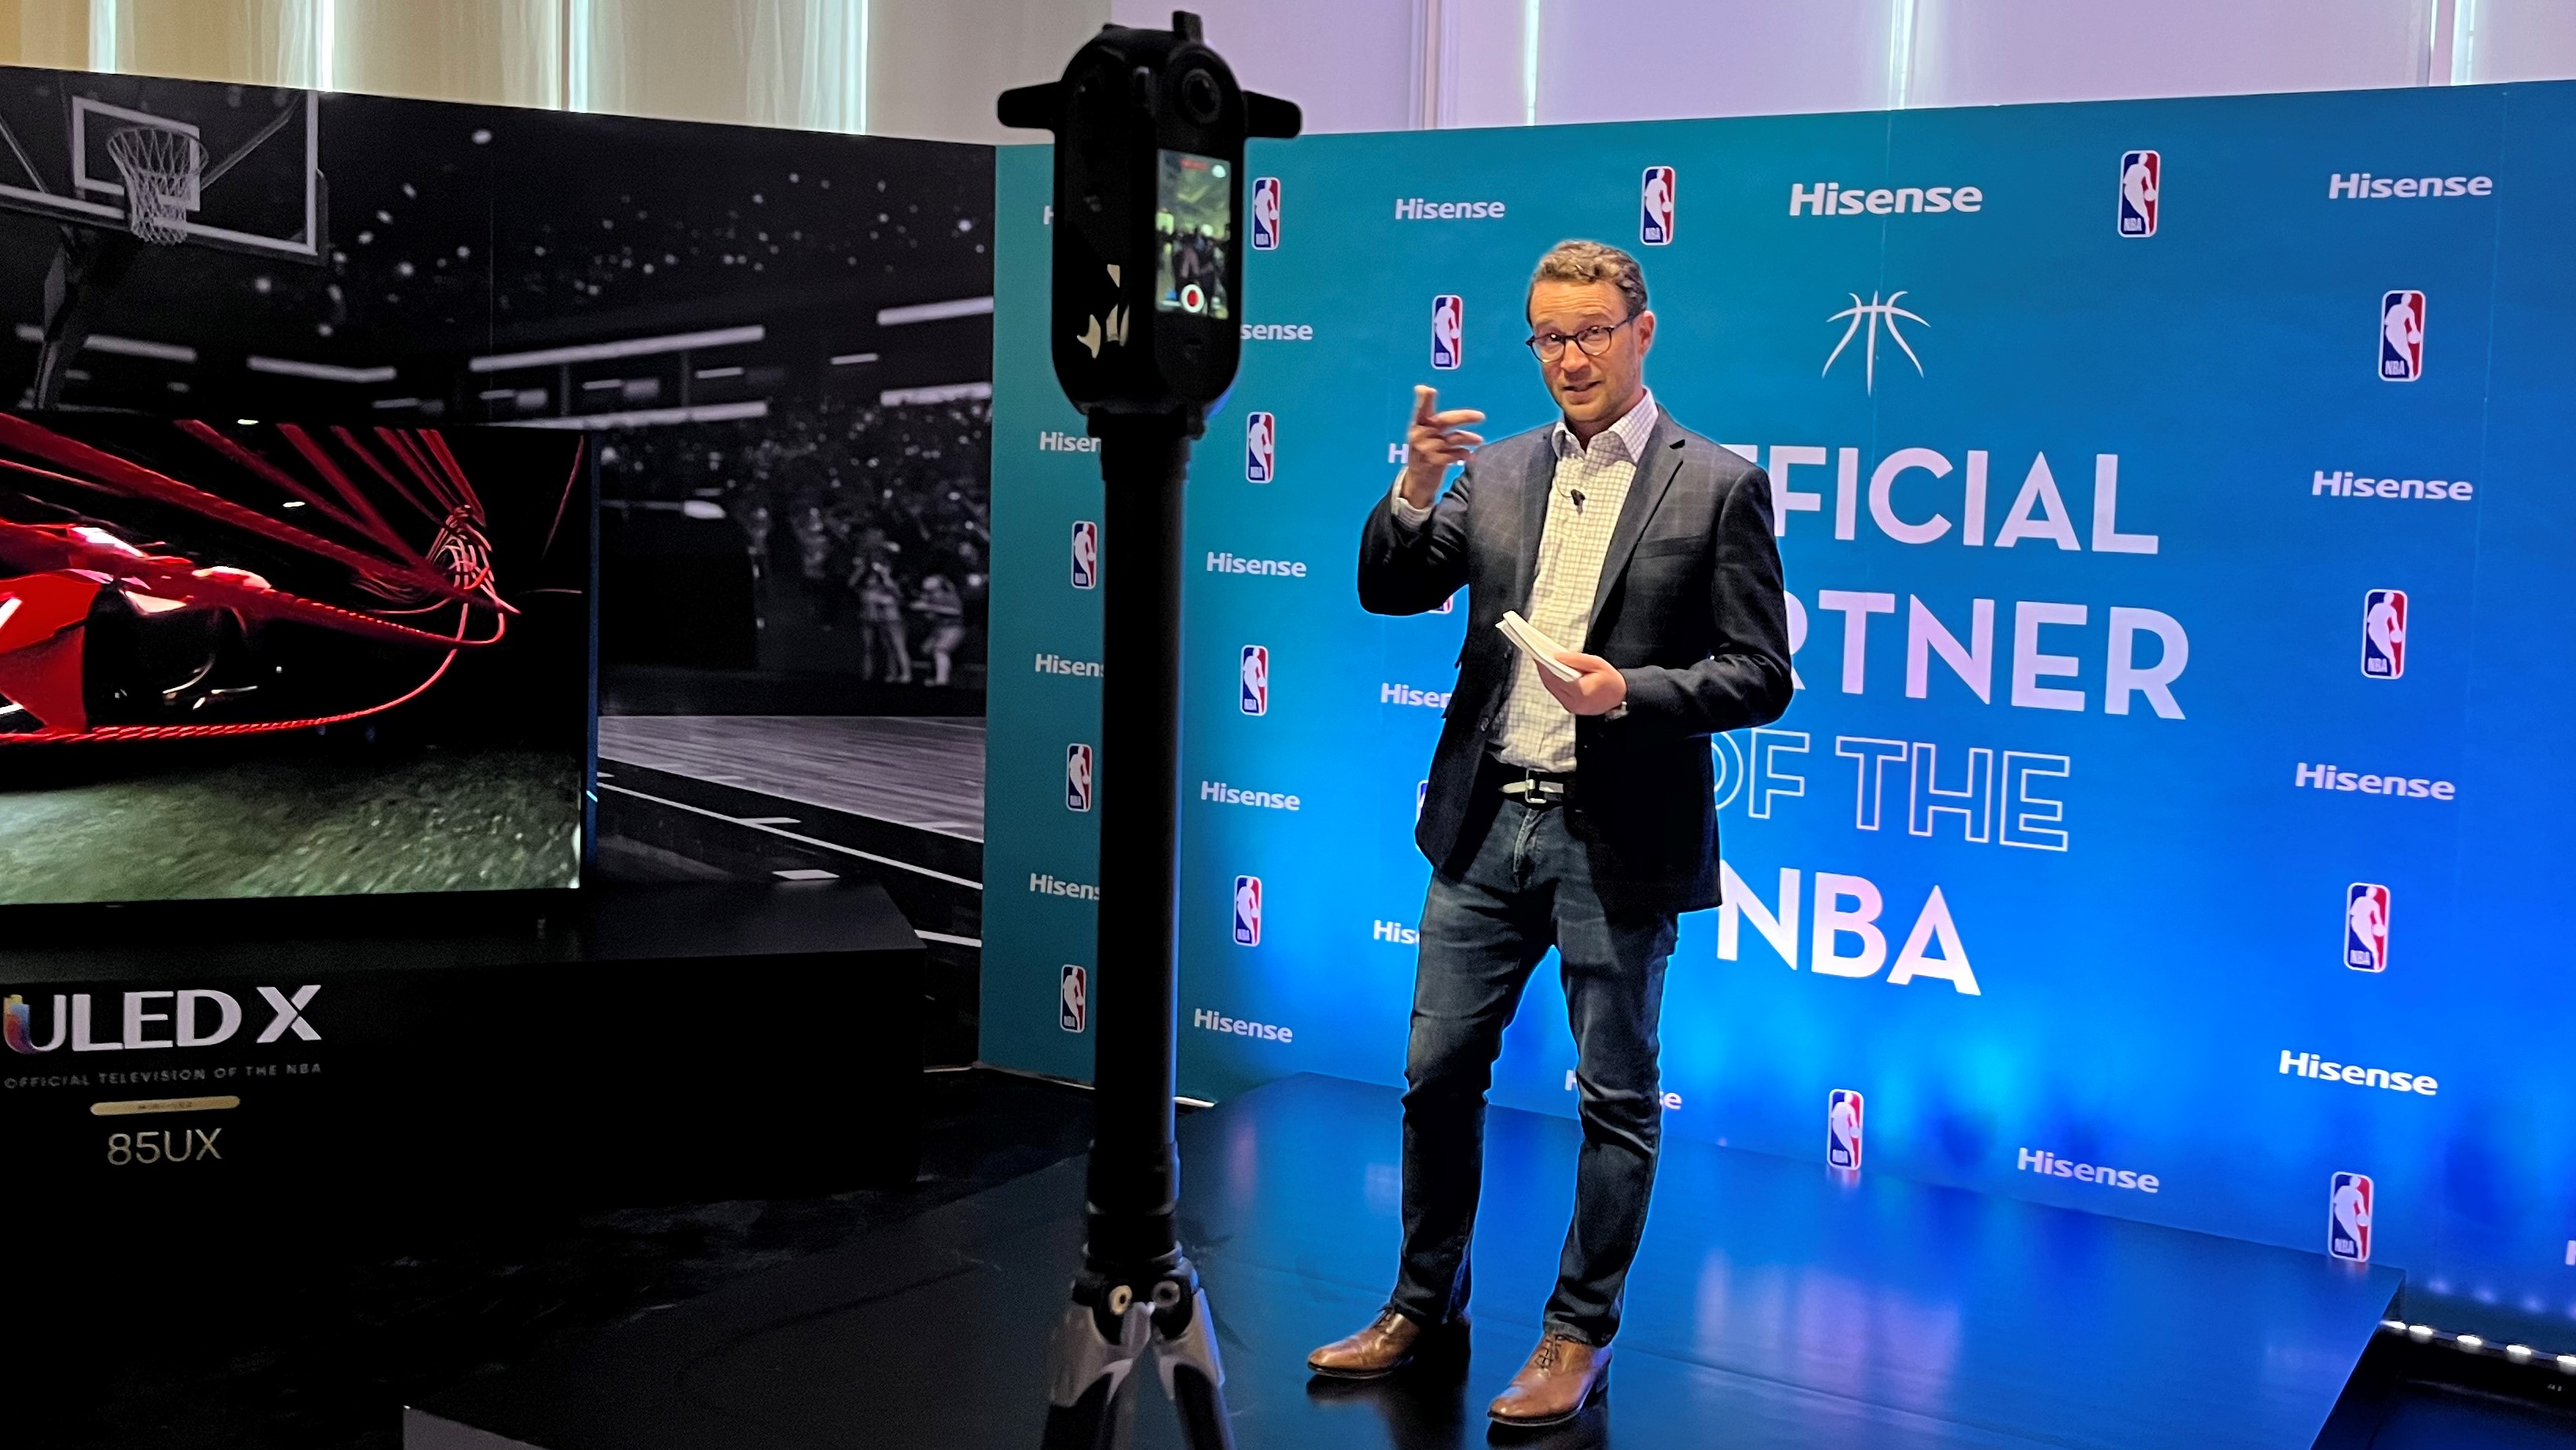 Hisense USA CEO David Gold announcing the brand's NBA sponsorship next to ULED X TV